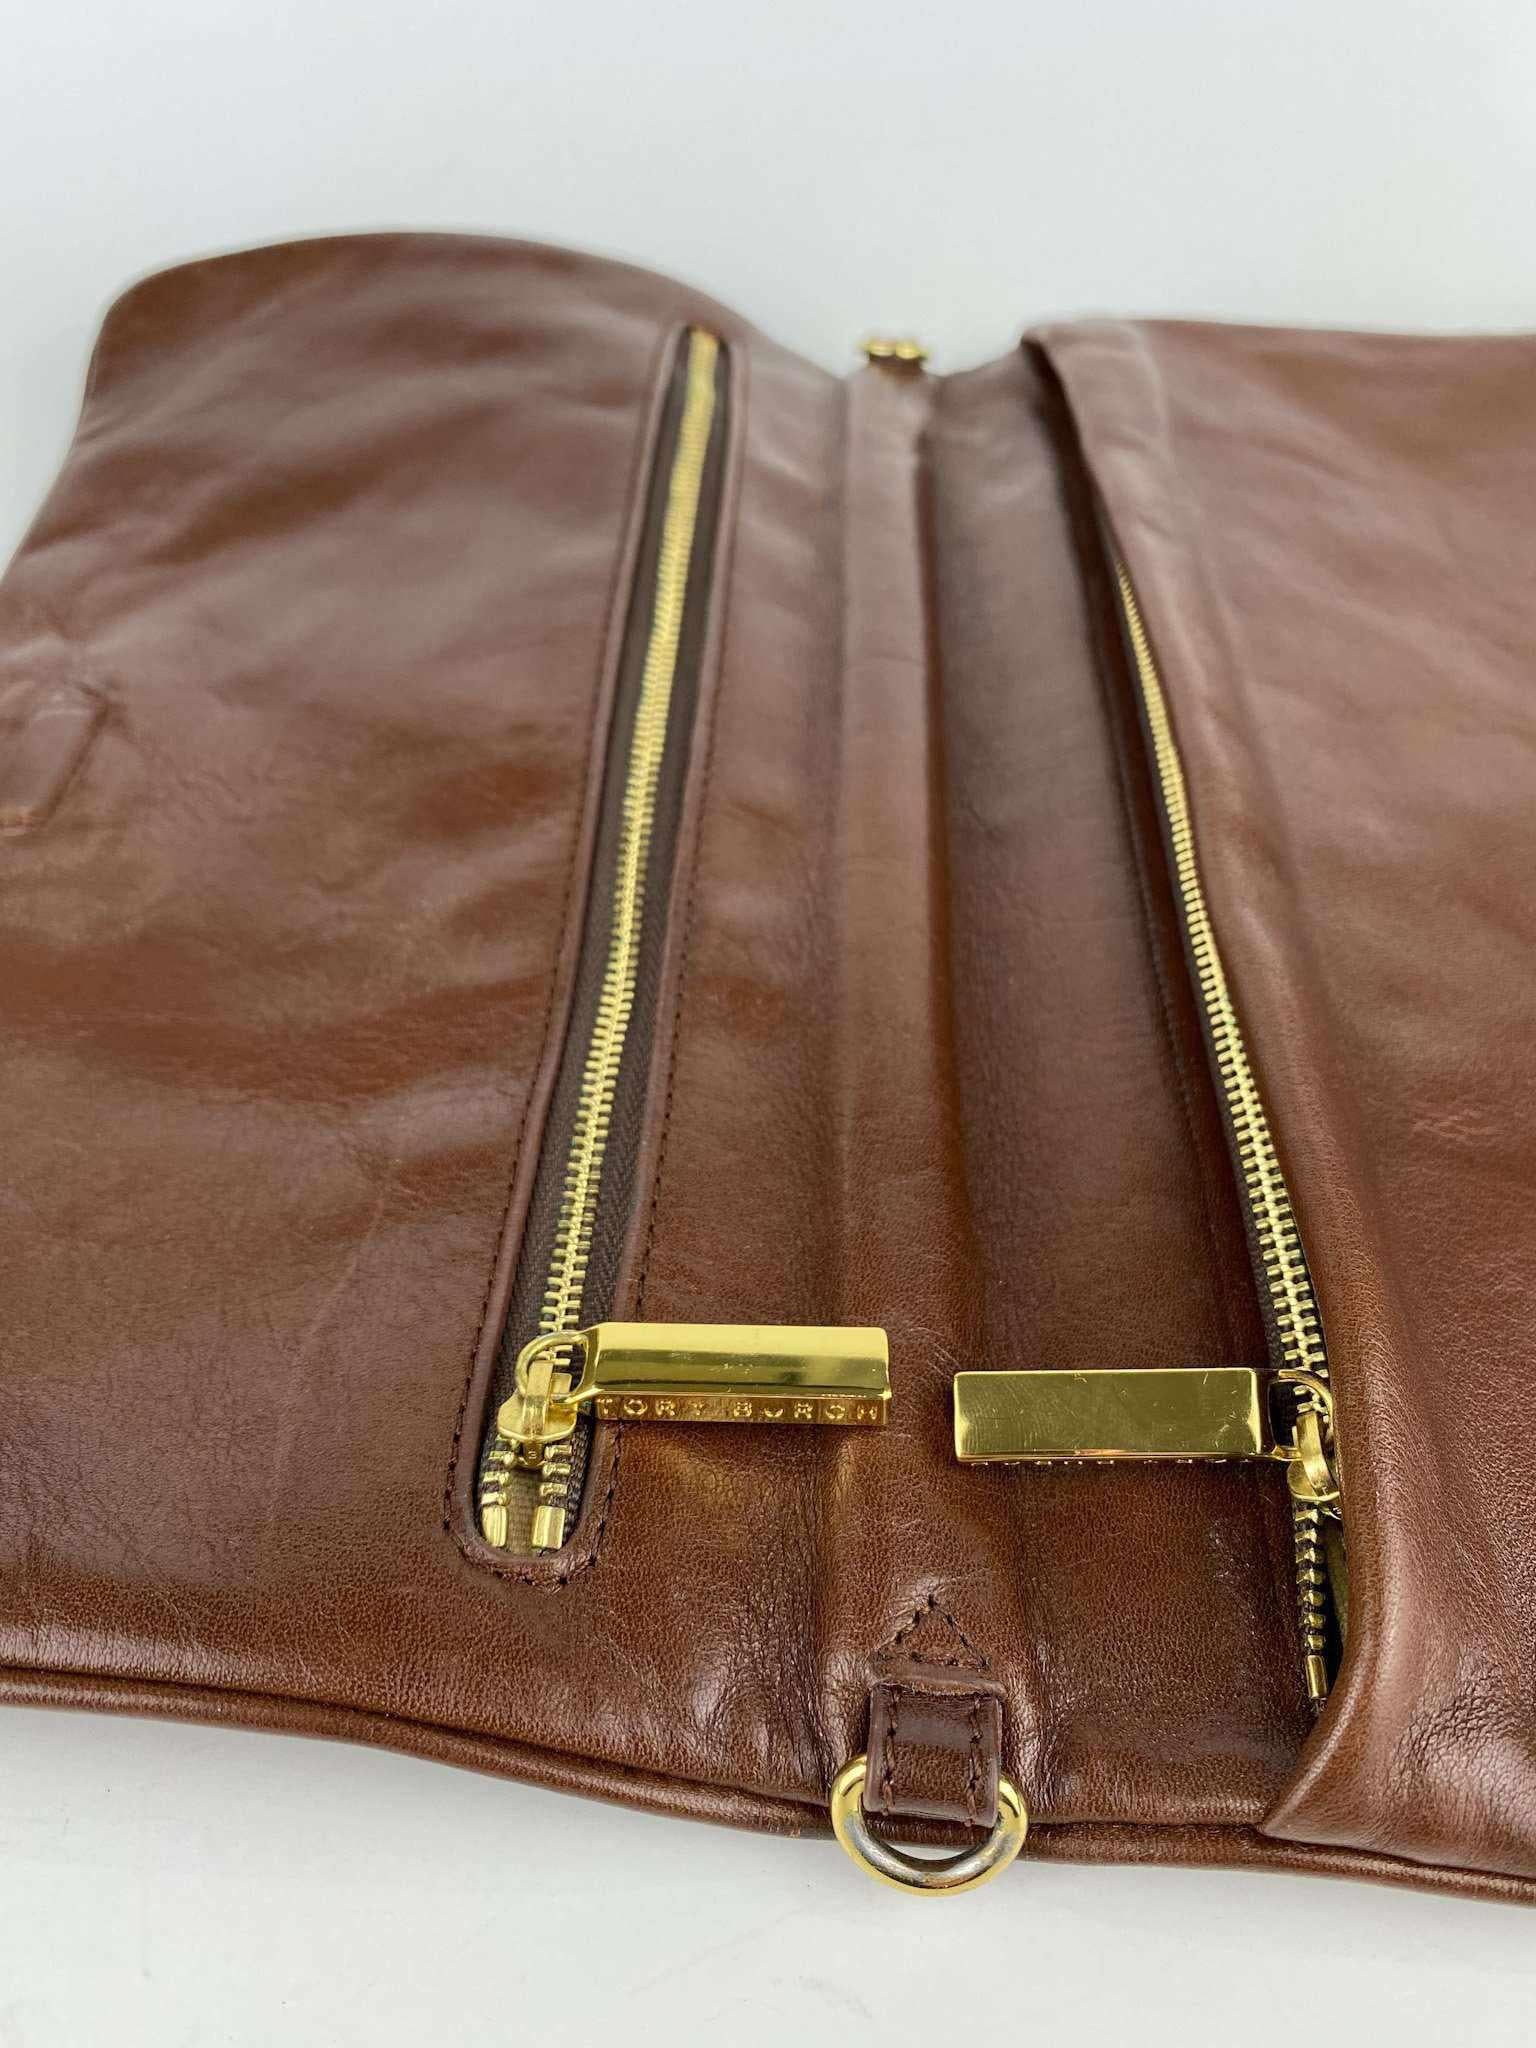 Tory Burch Clutch chain bag in gold hardware